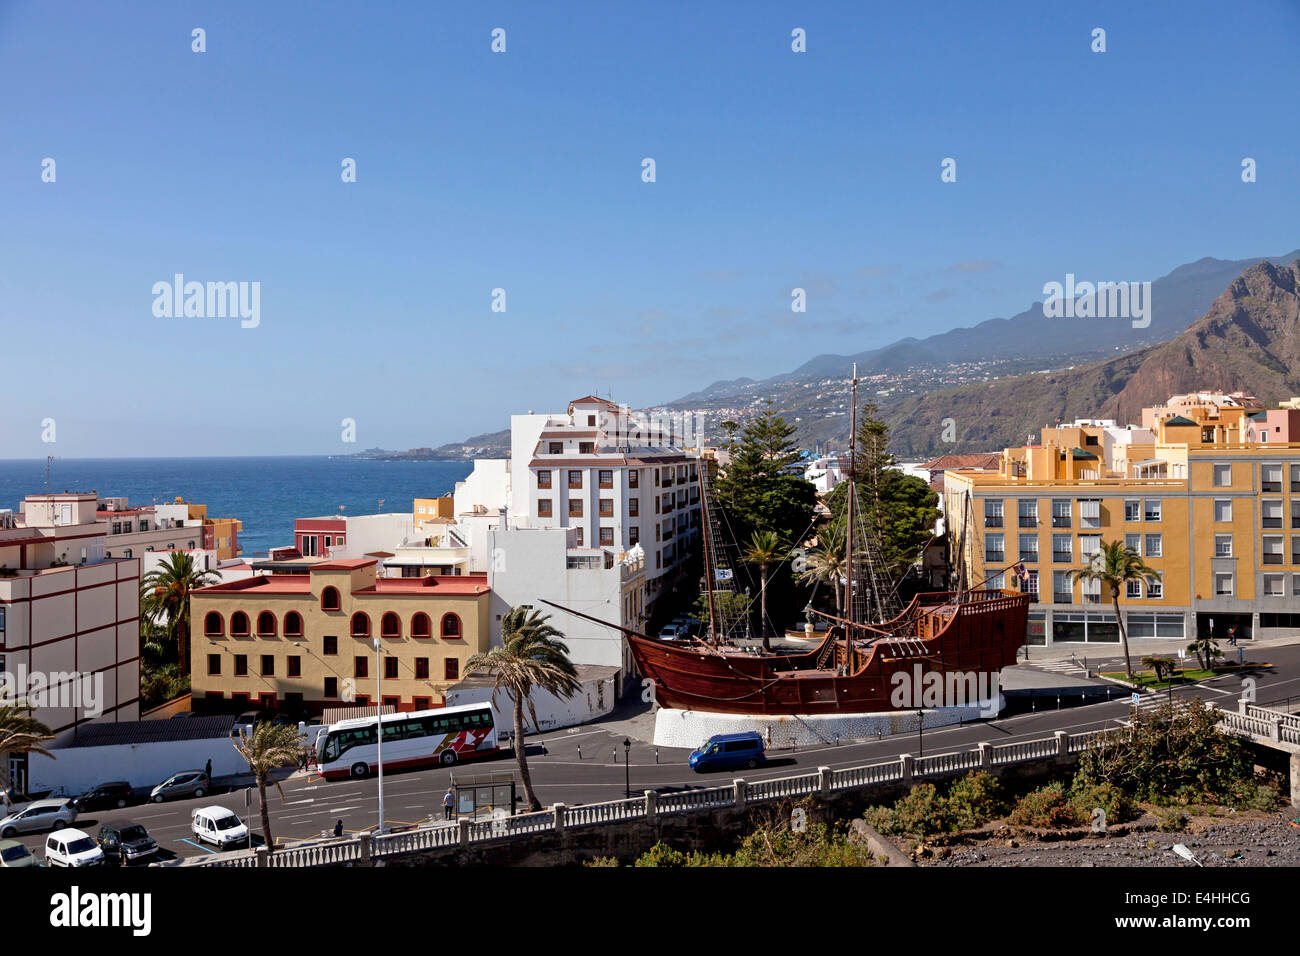 replica of Christopher Columbus ship Santa Maria in Santa Cruz de La Palma, capital of the island La Palma, Canary Islands, Spai Stock Photo